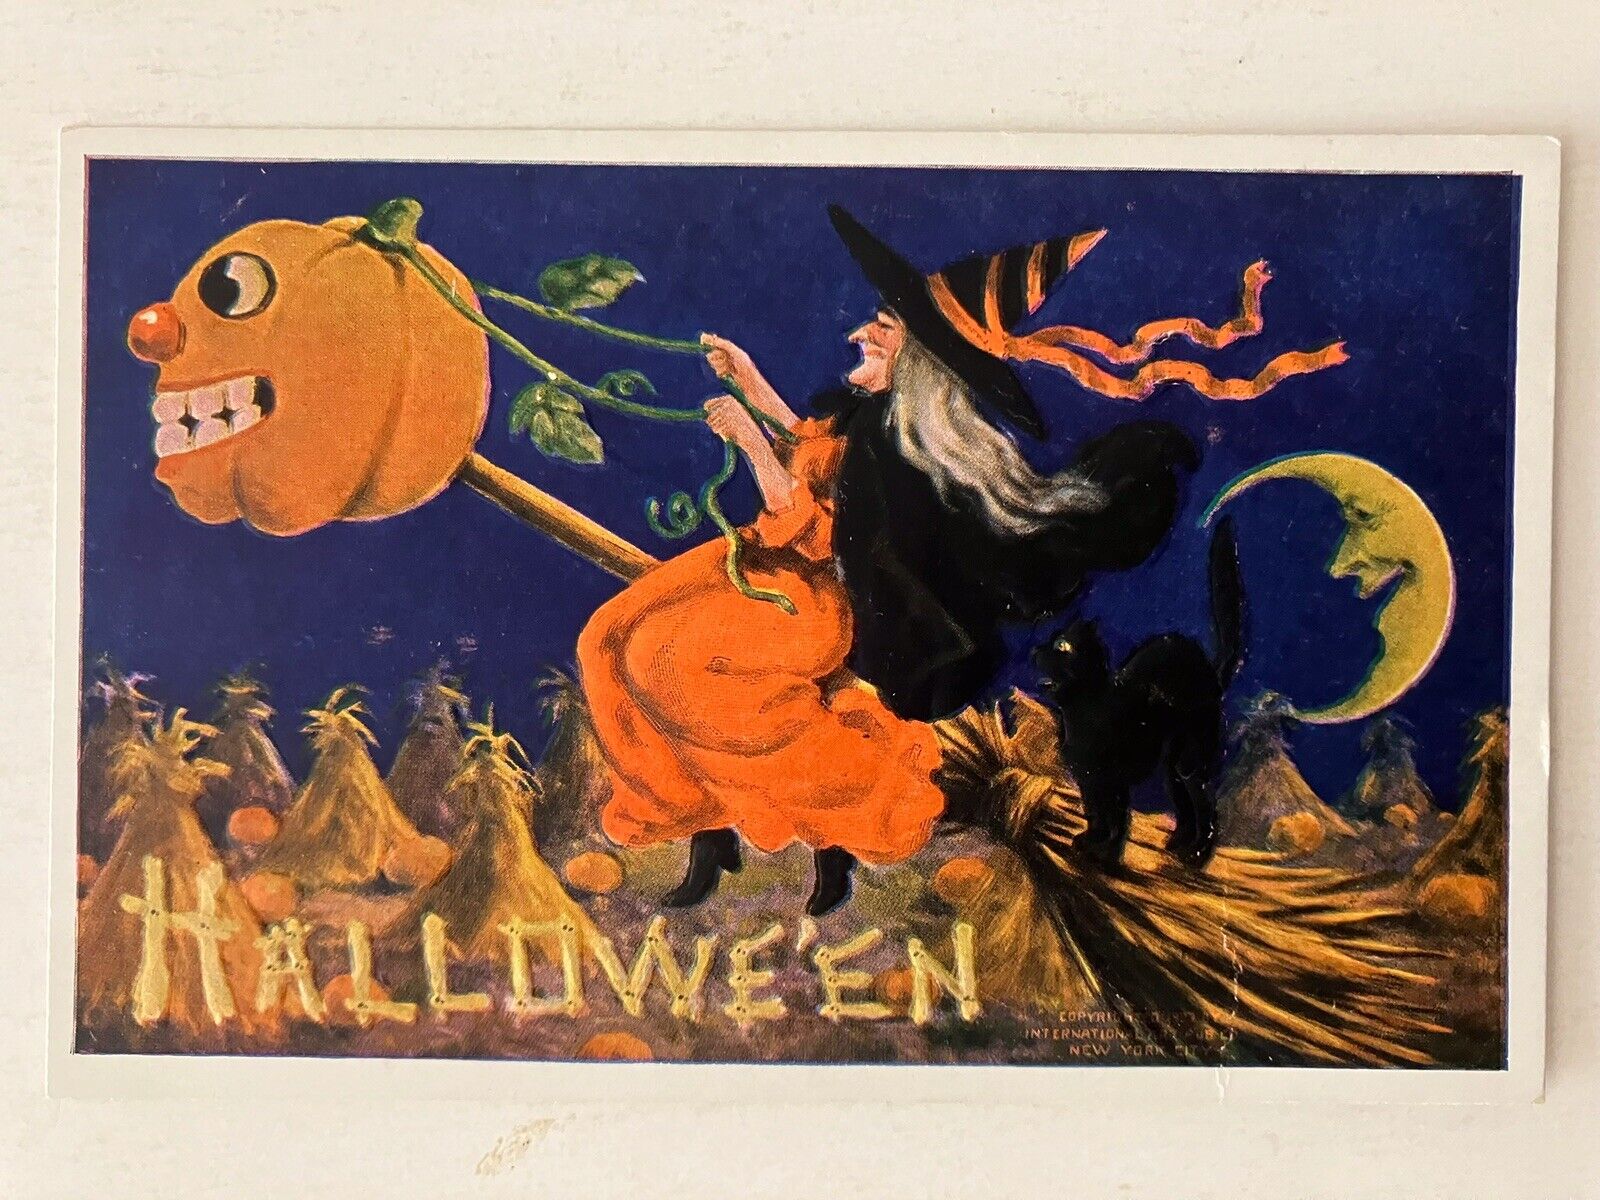 c1909 Intl Art Halloween Postcard Witch And Black Cat Riding On JOL Broom